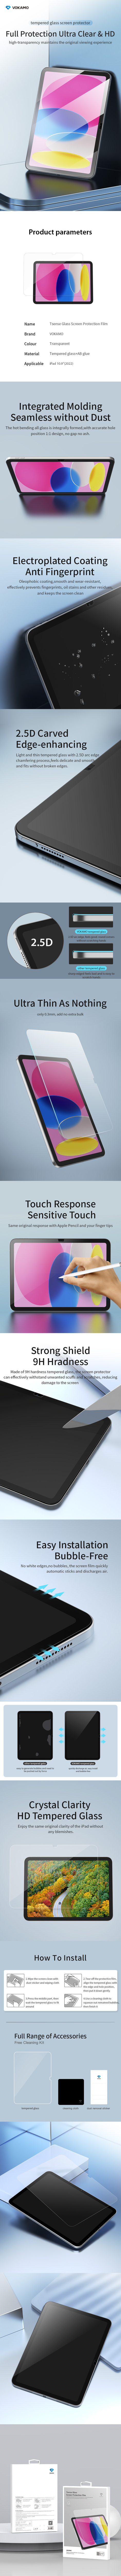 iPad-第十代钢化膜详情页-英文.jpg